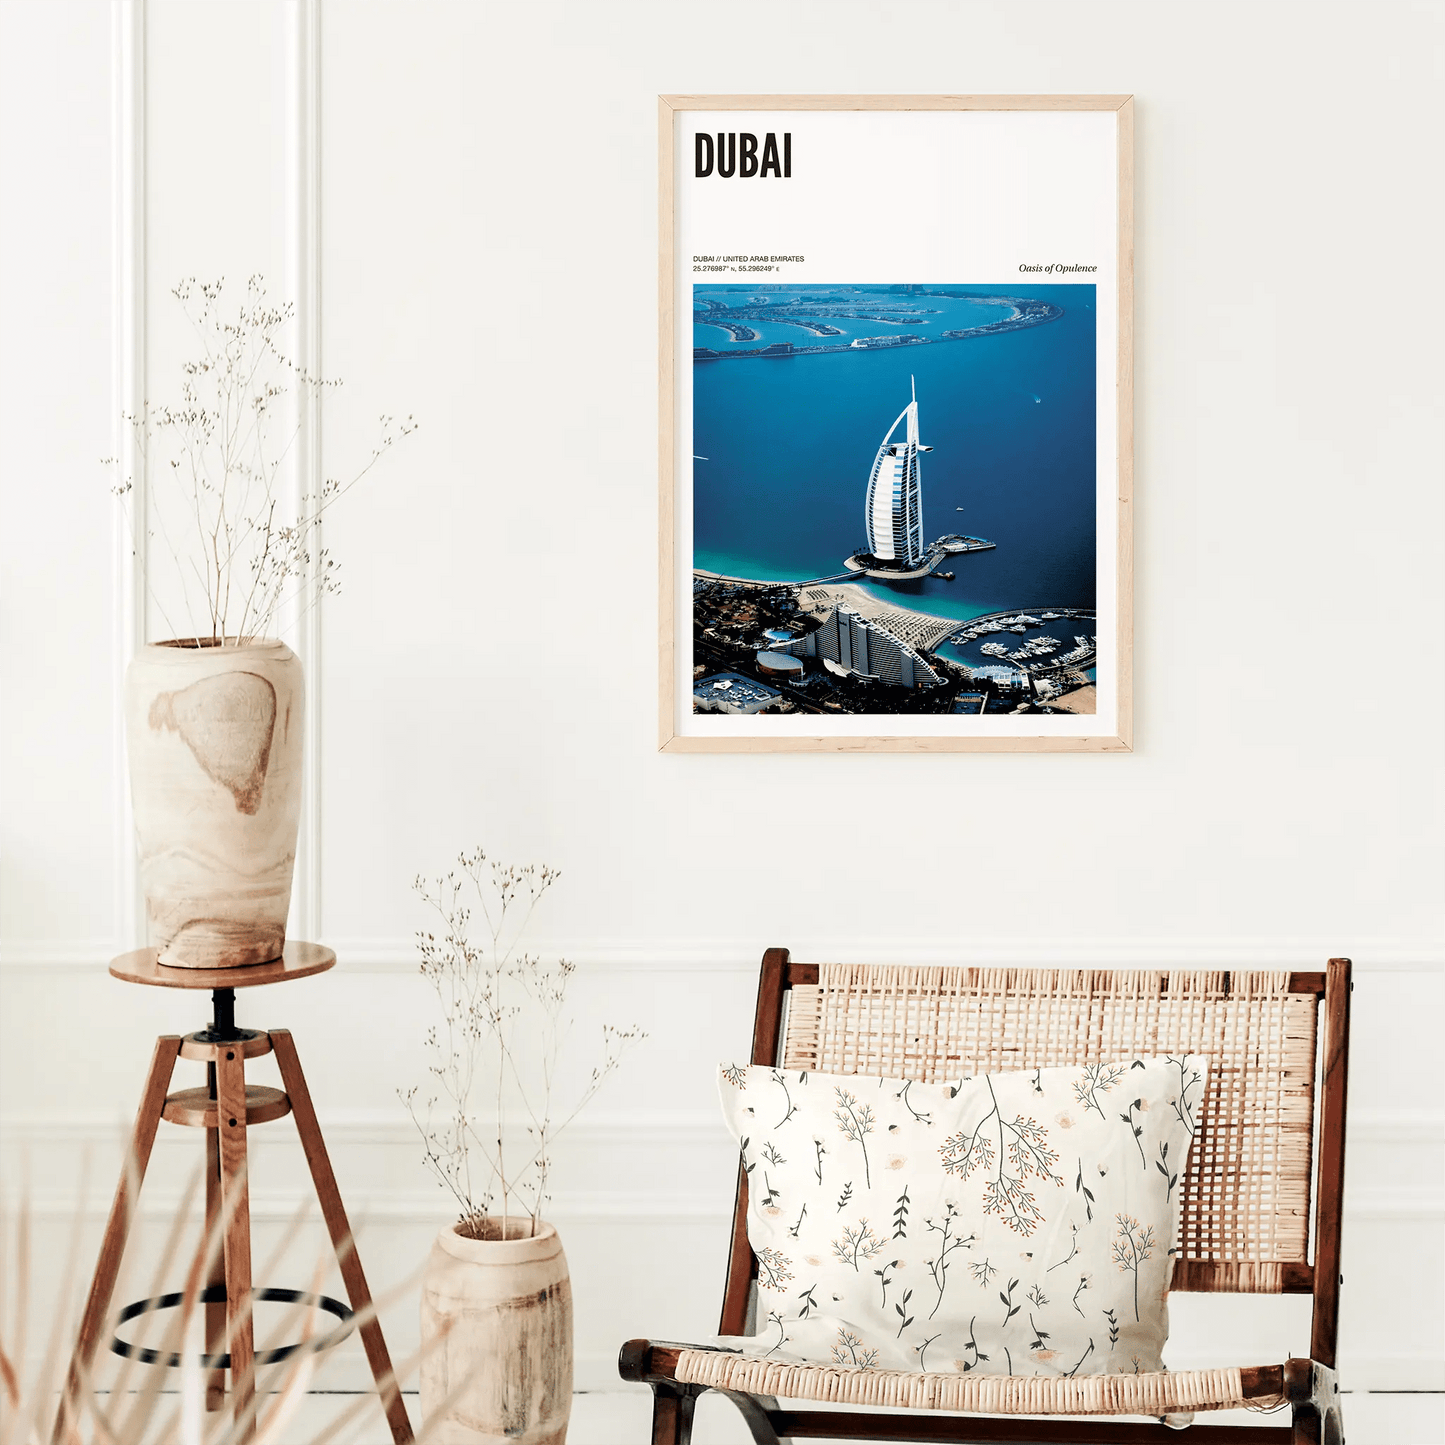 Dubai Odyssey Poster - The Globe Gallery